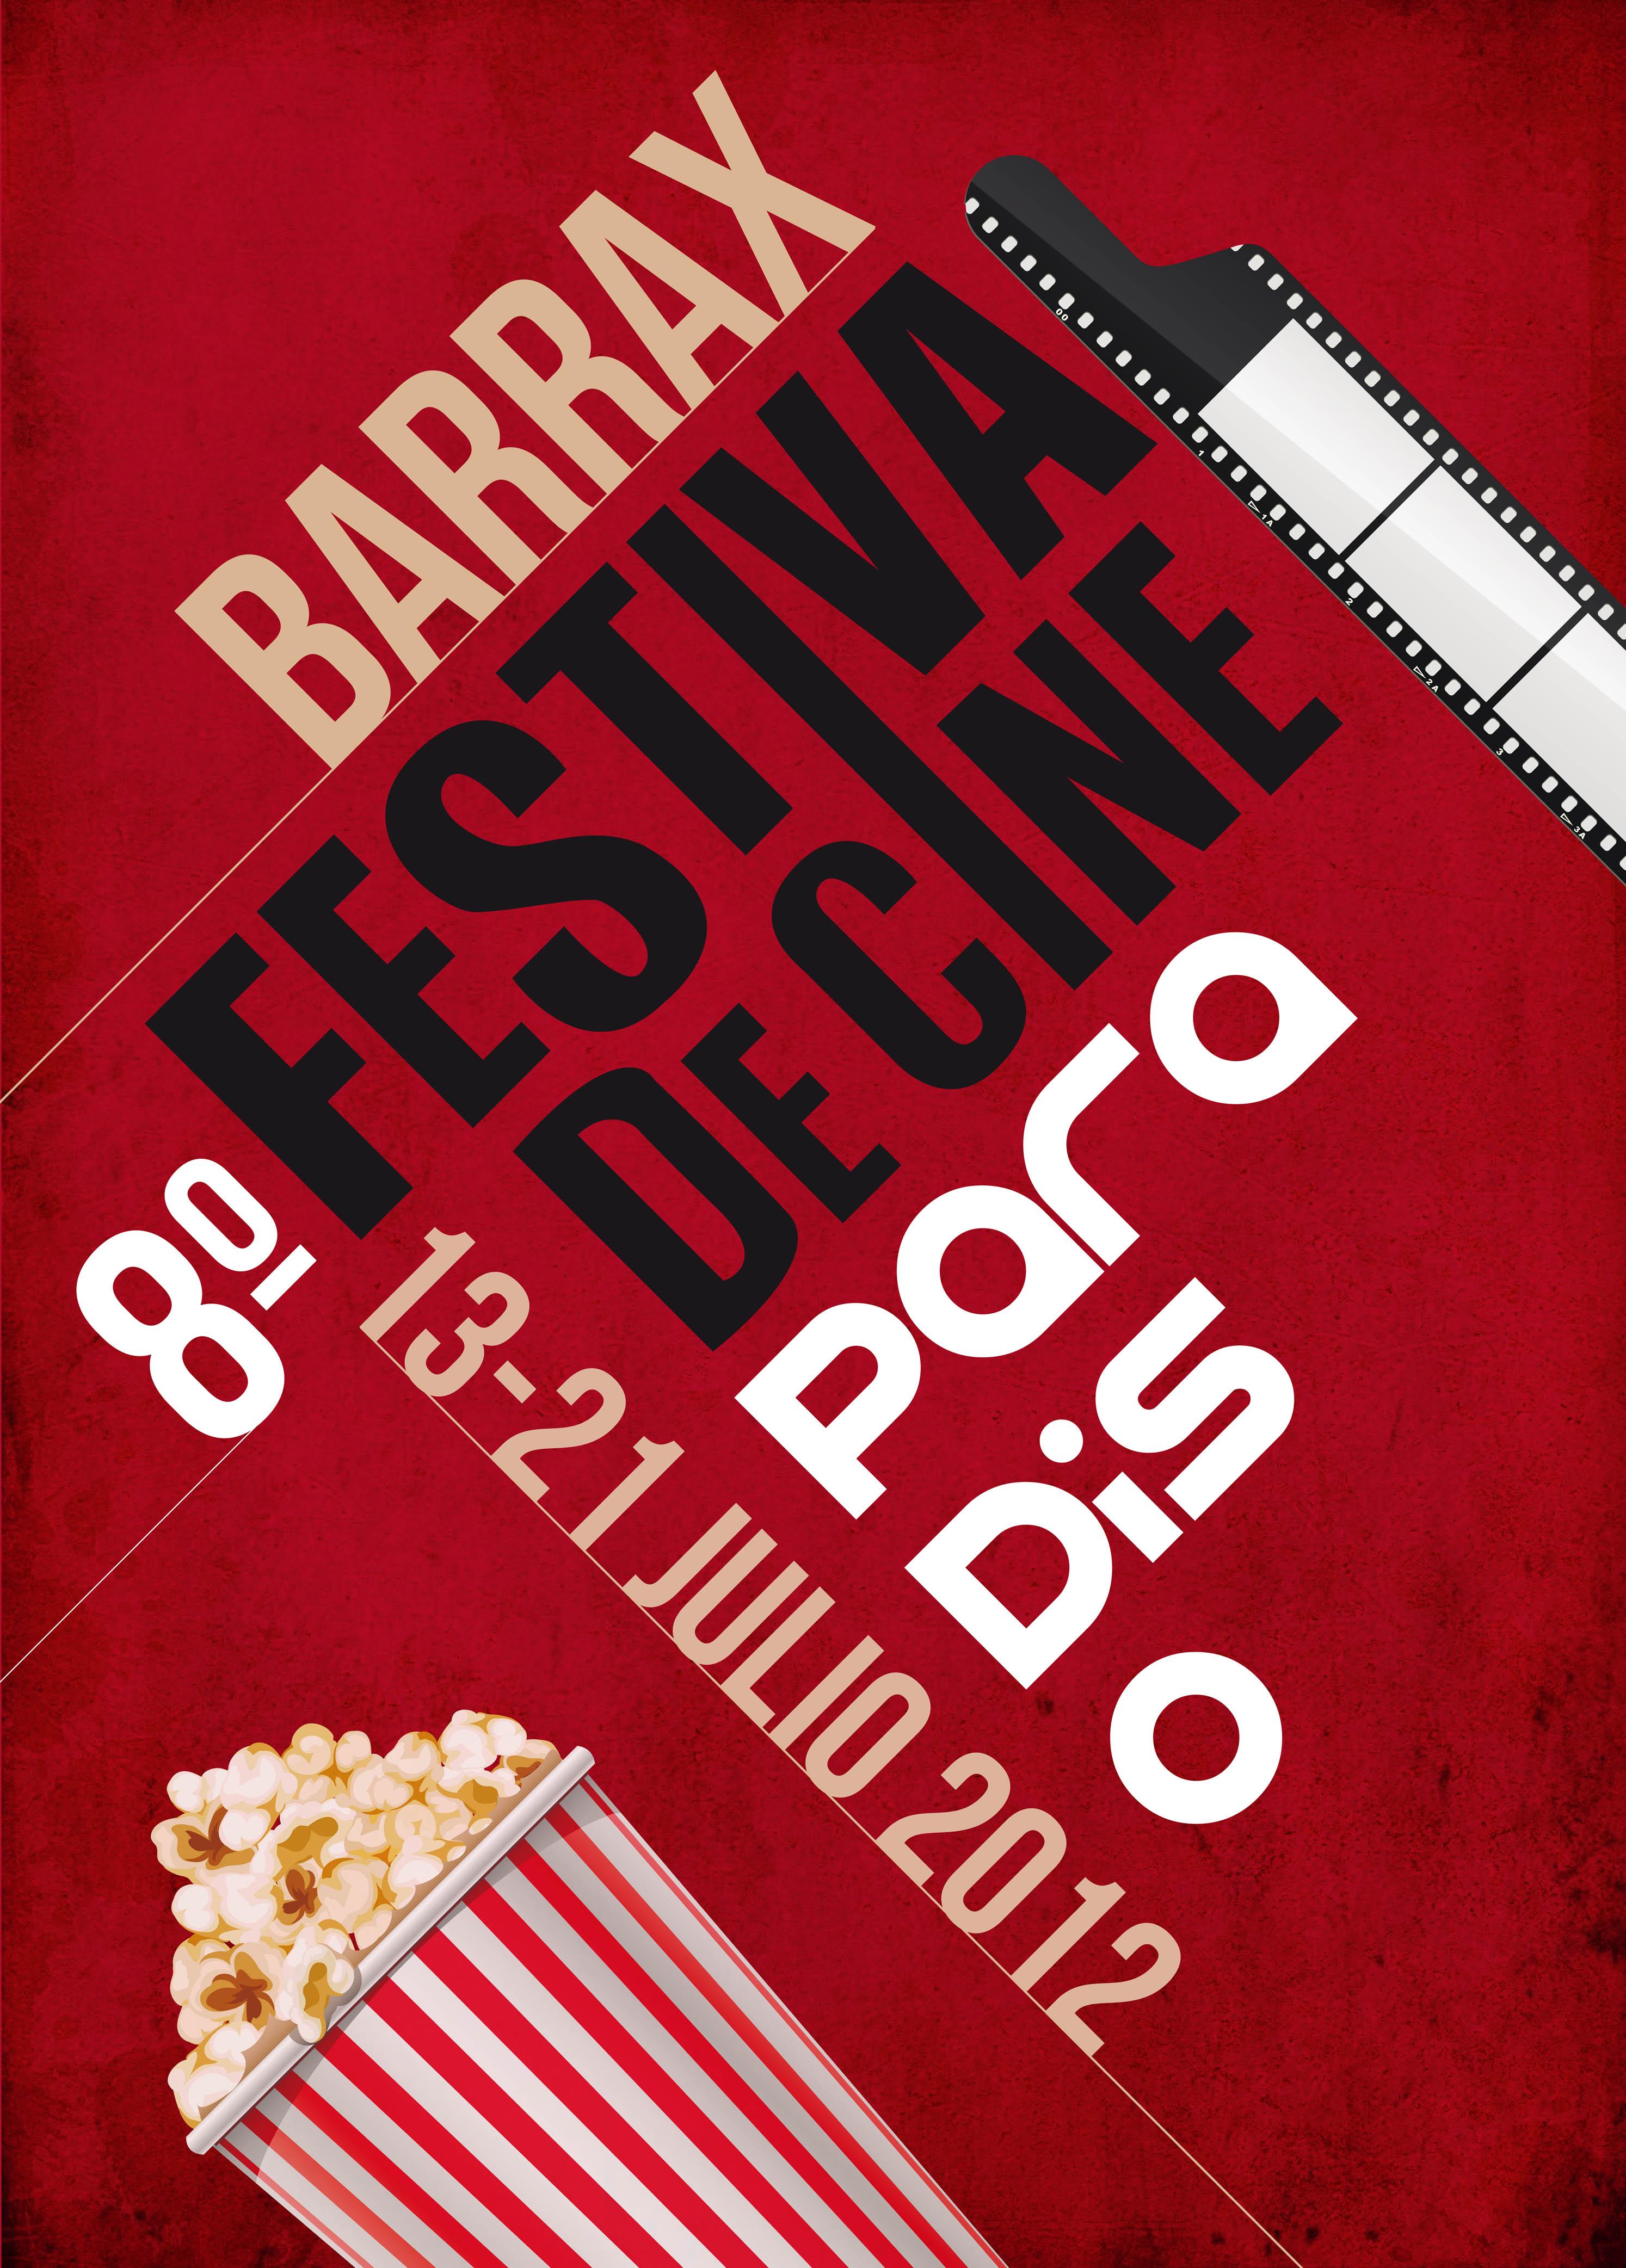 VIII Festival de Cine Paradiso de Barrax